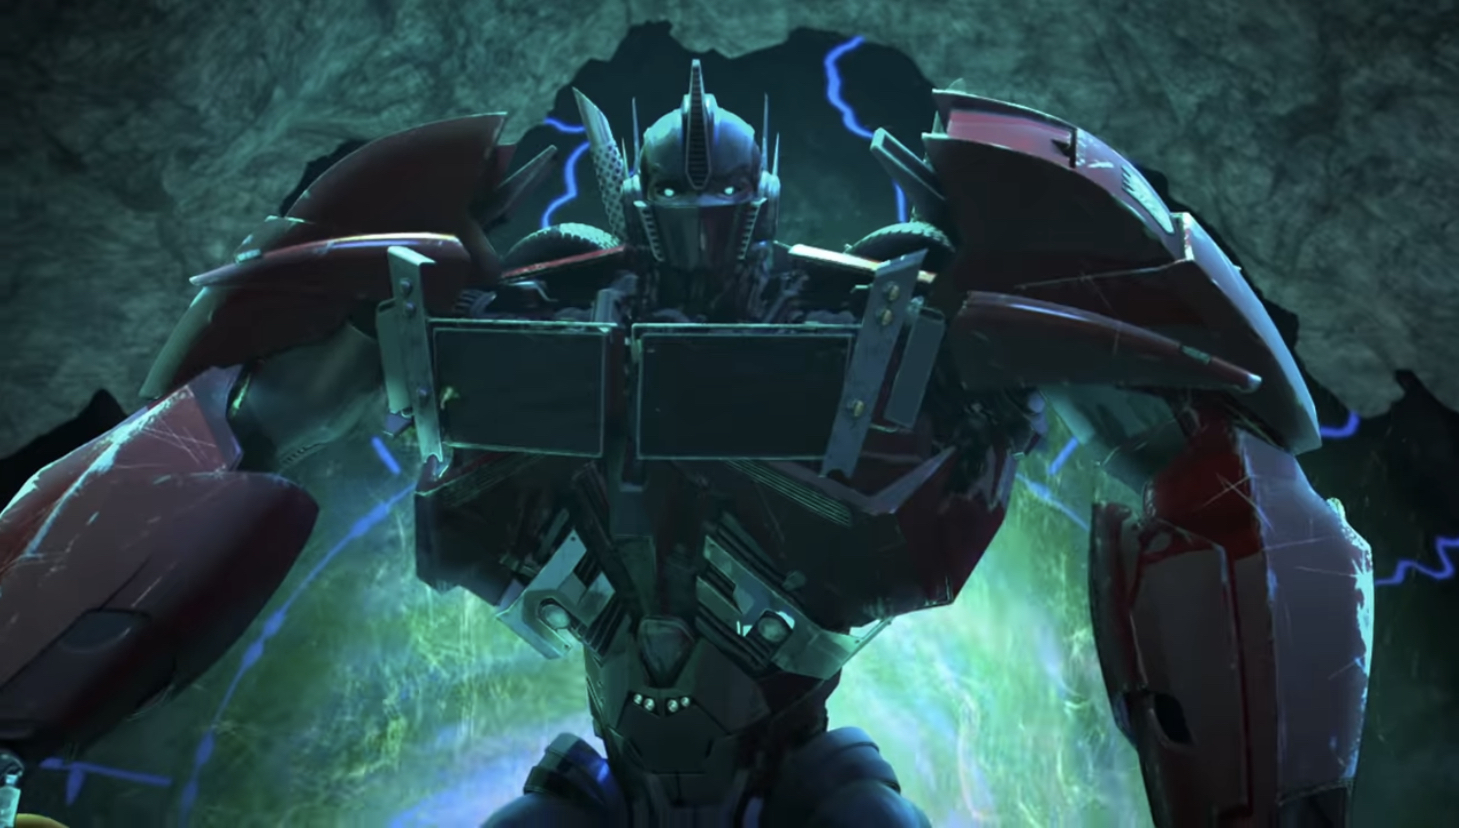 Prime power. Орион ПАКС трансформеры. Orion Pax Transformers Prime. Арена Каона трансформеры. Битва трансформеров фигурки.